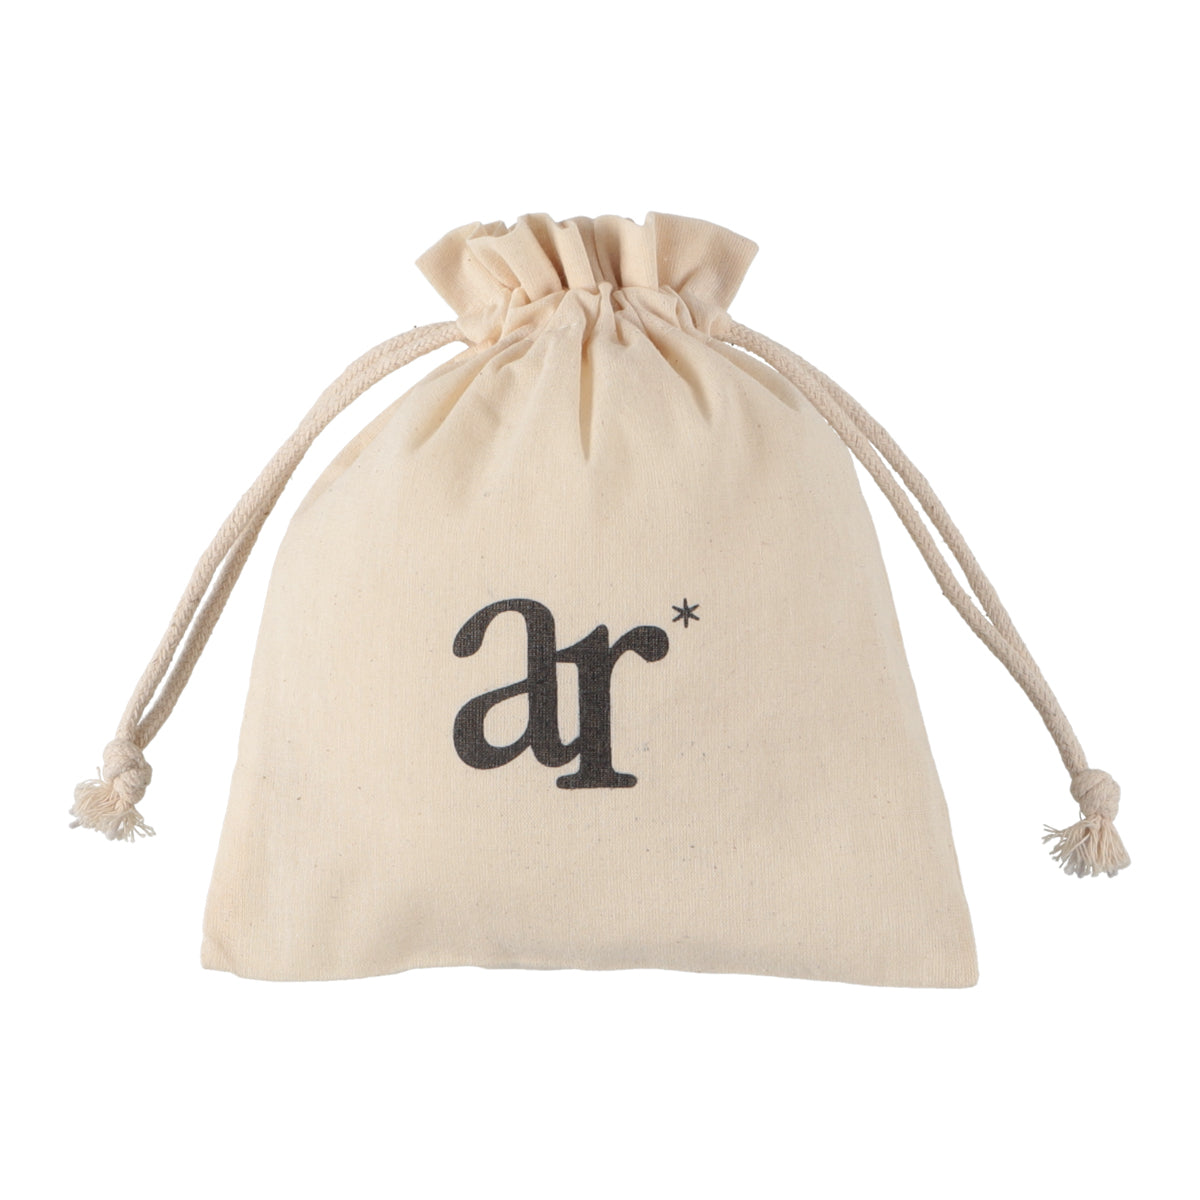 Gift Drawstrings Bag